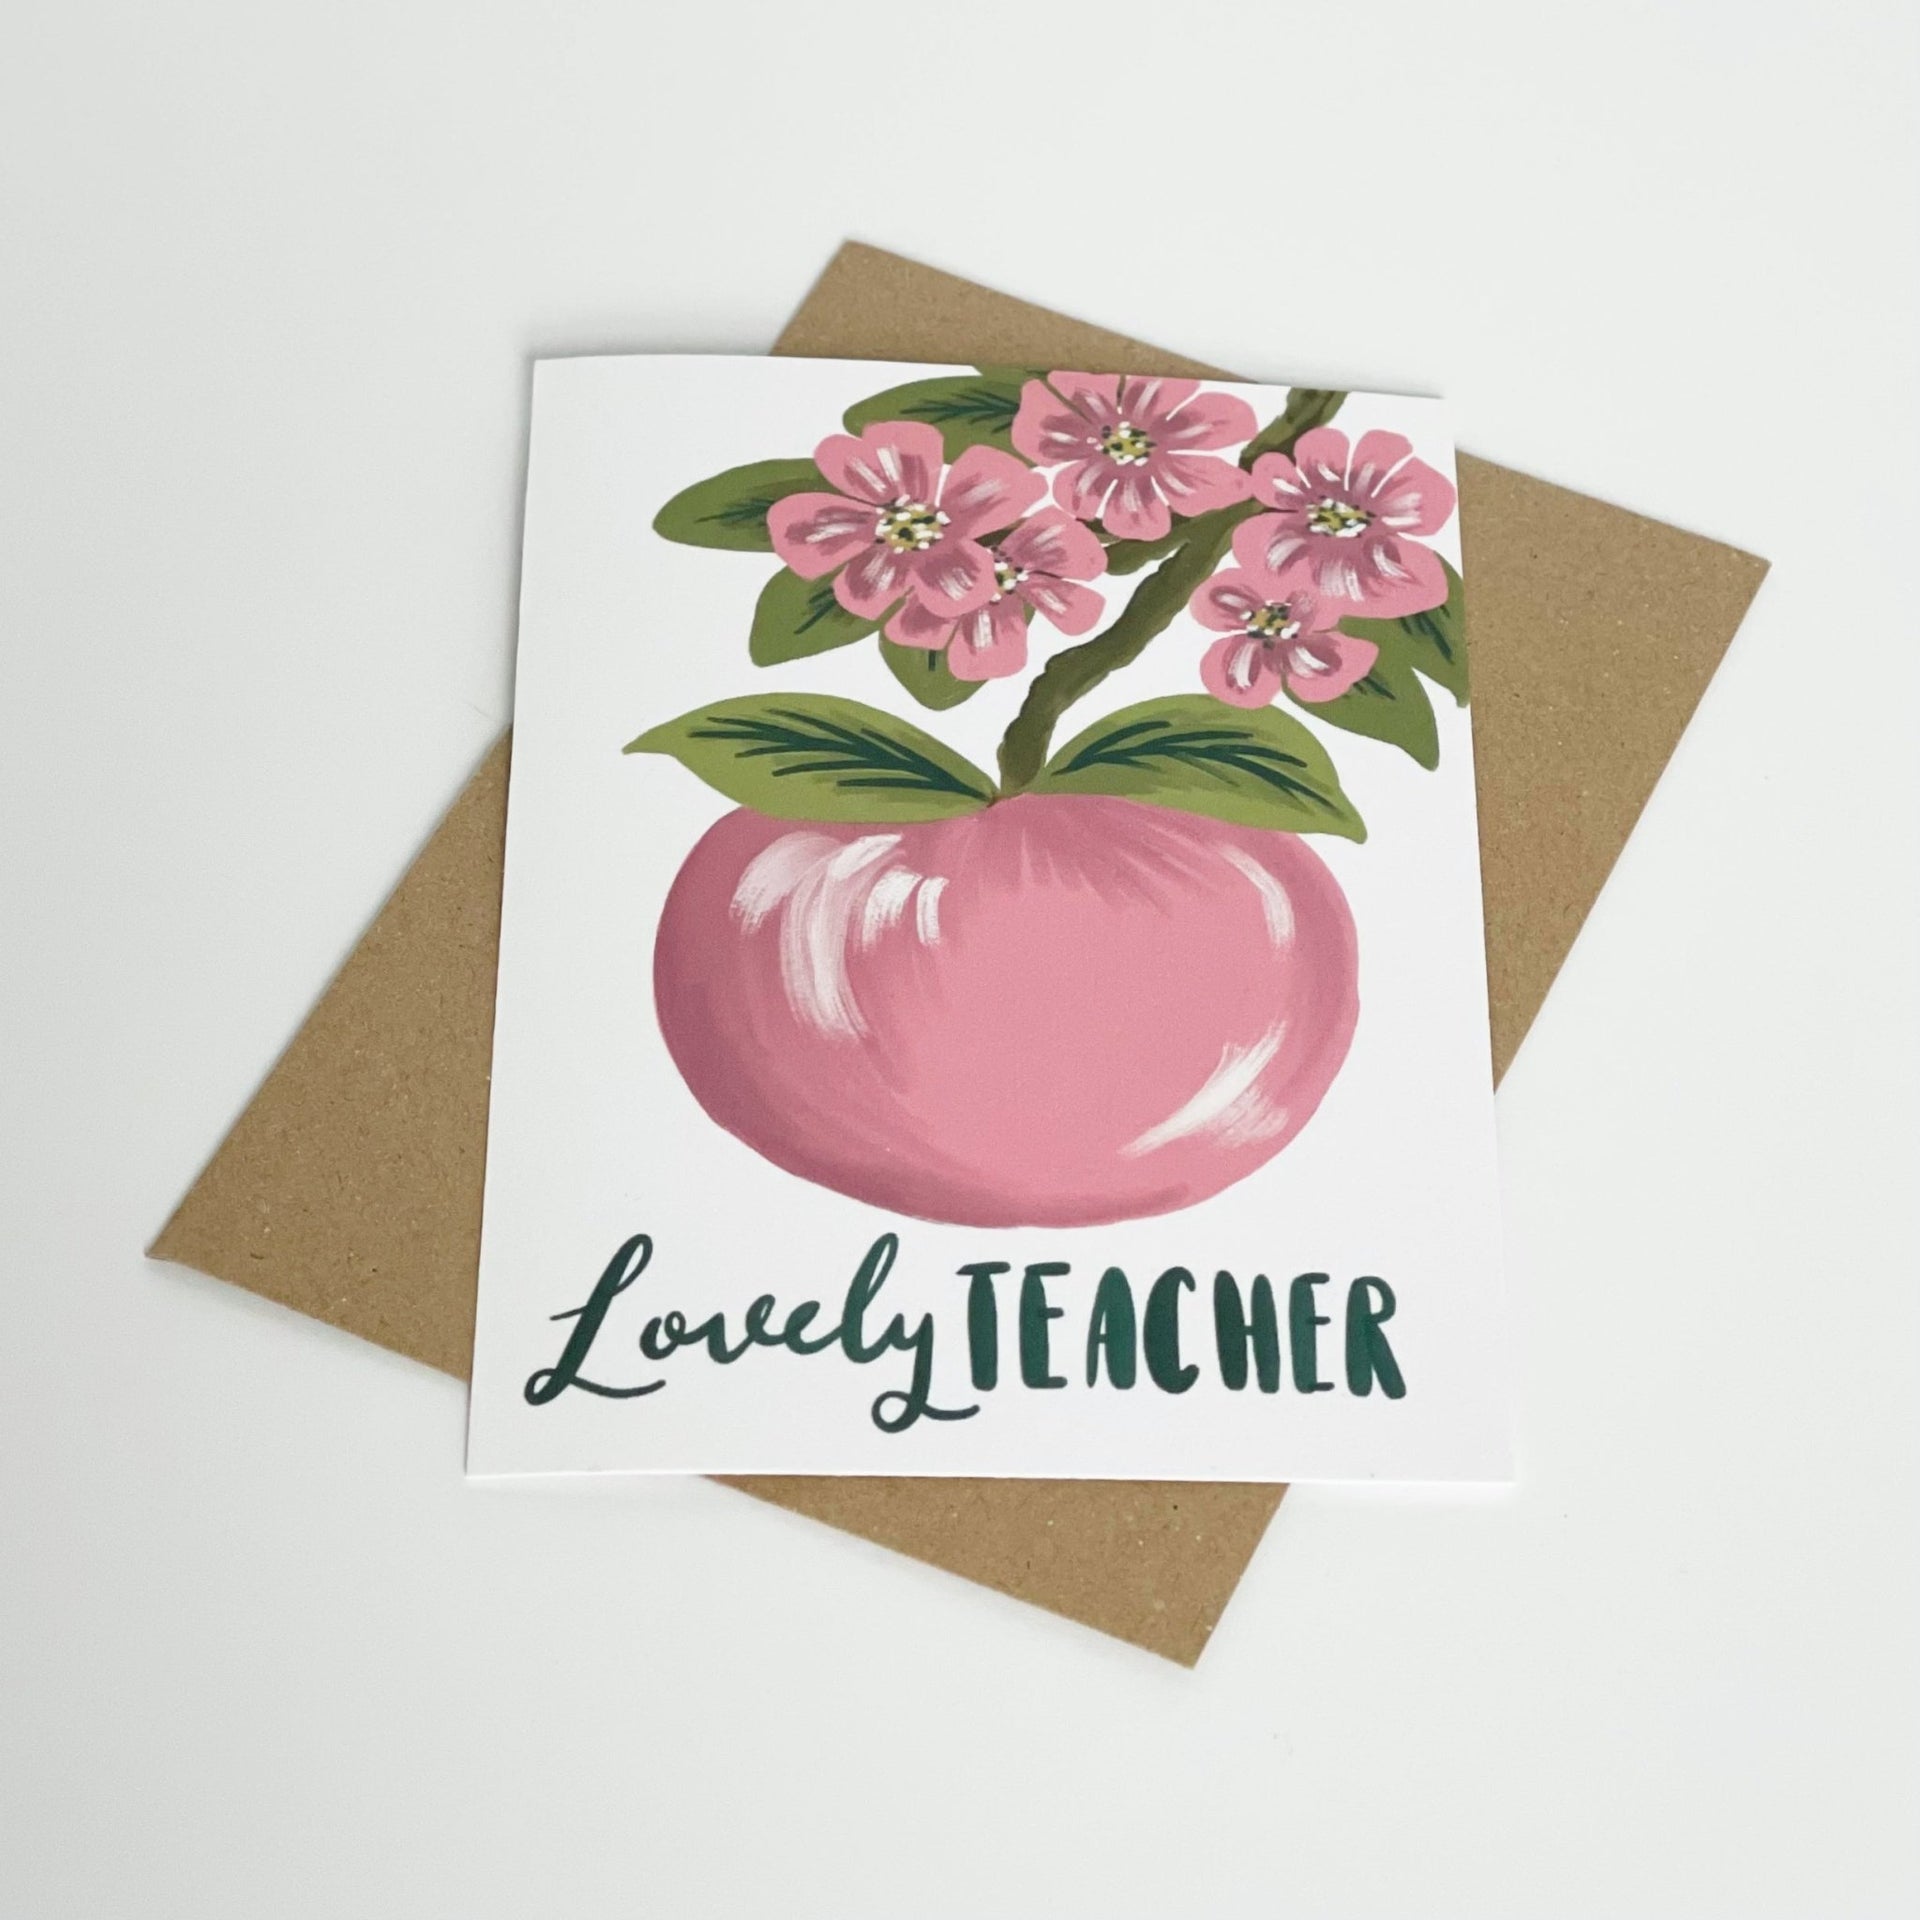 Lovely Teacher - Apple Blossom card - Made Scotland